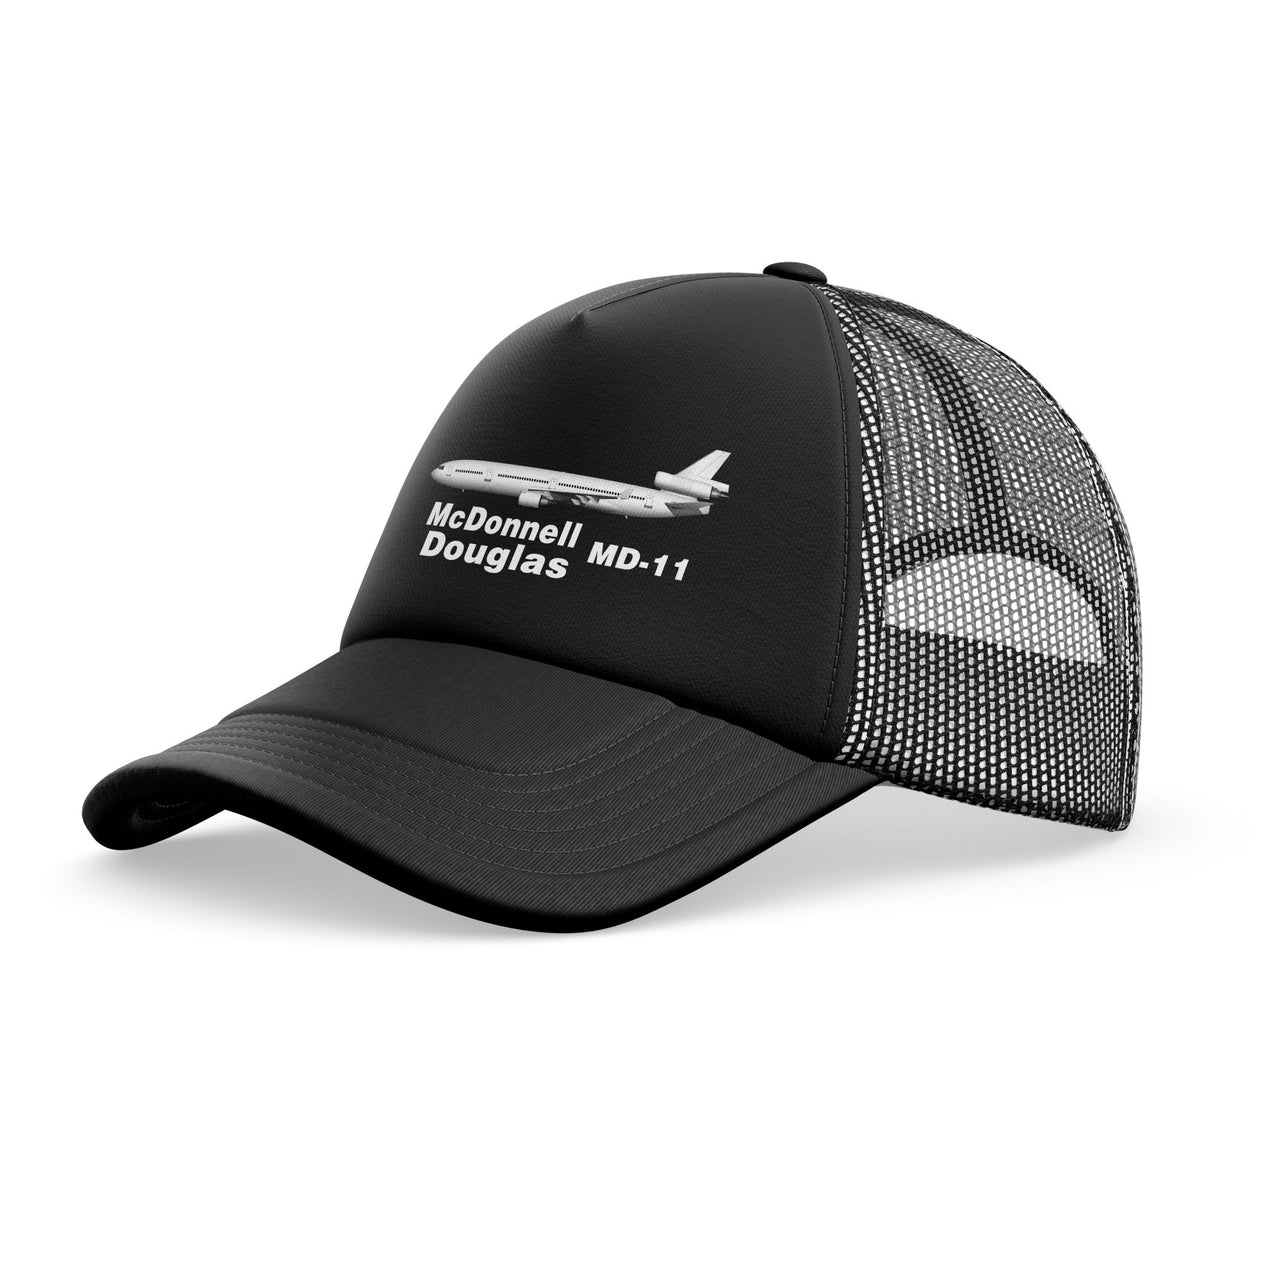 The McDonnell Douglas MD-11 Designed Trucker Caps & Hats